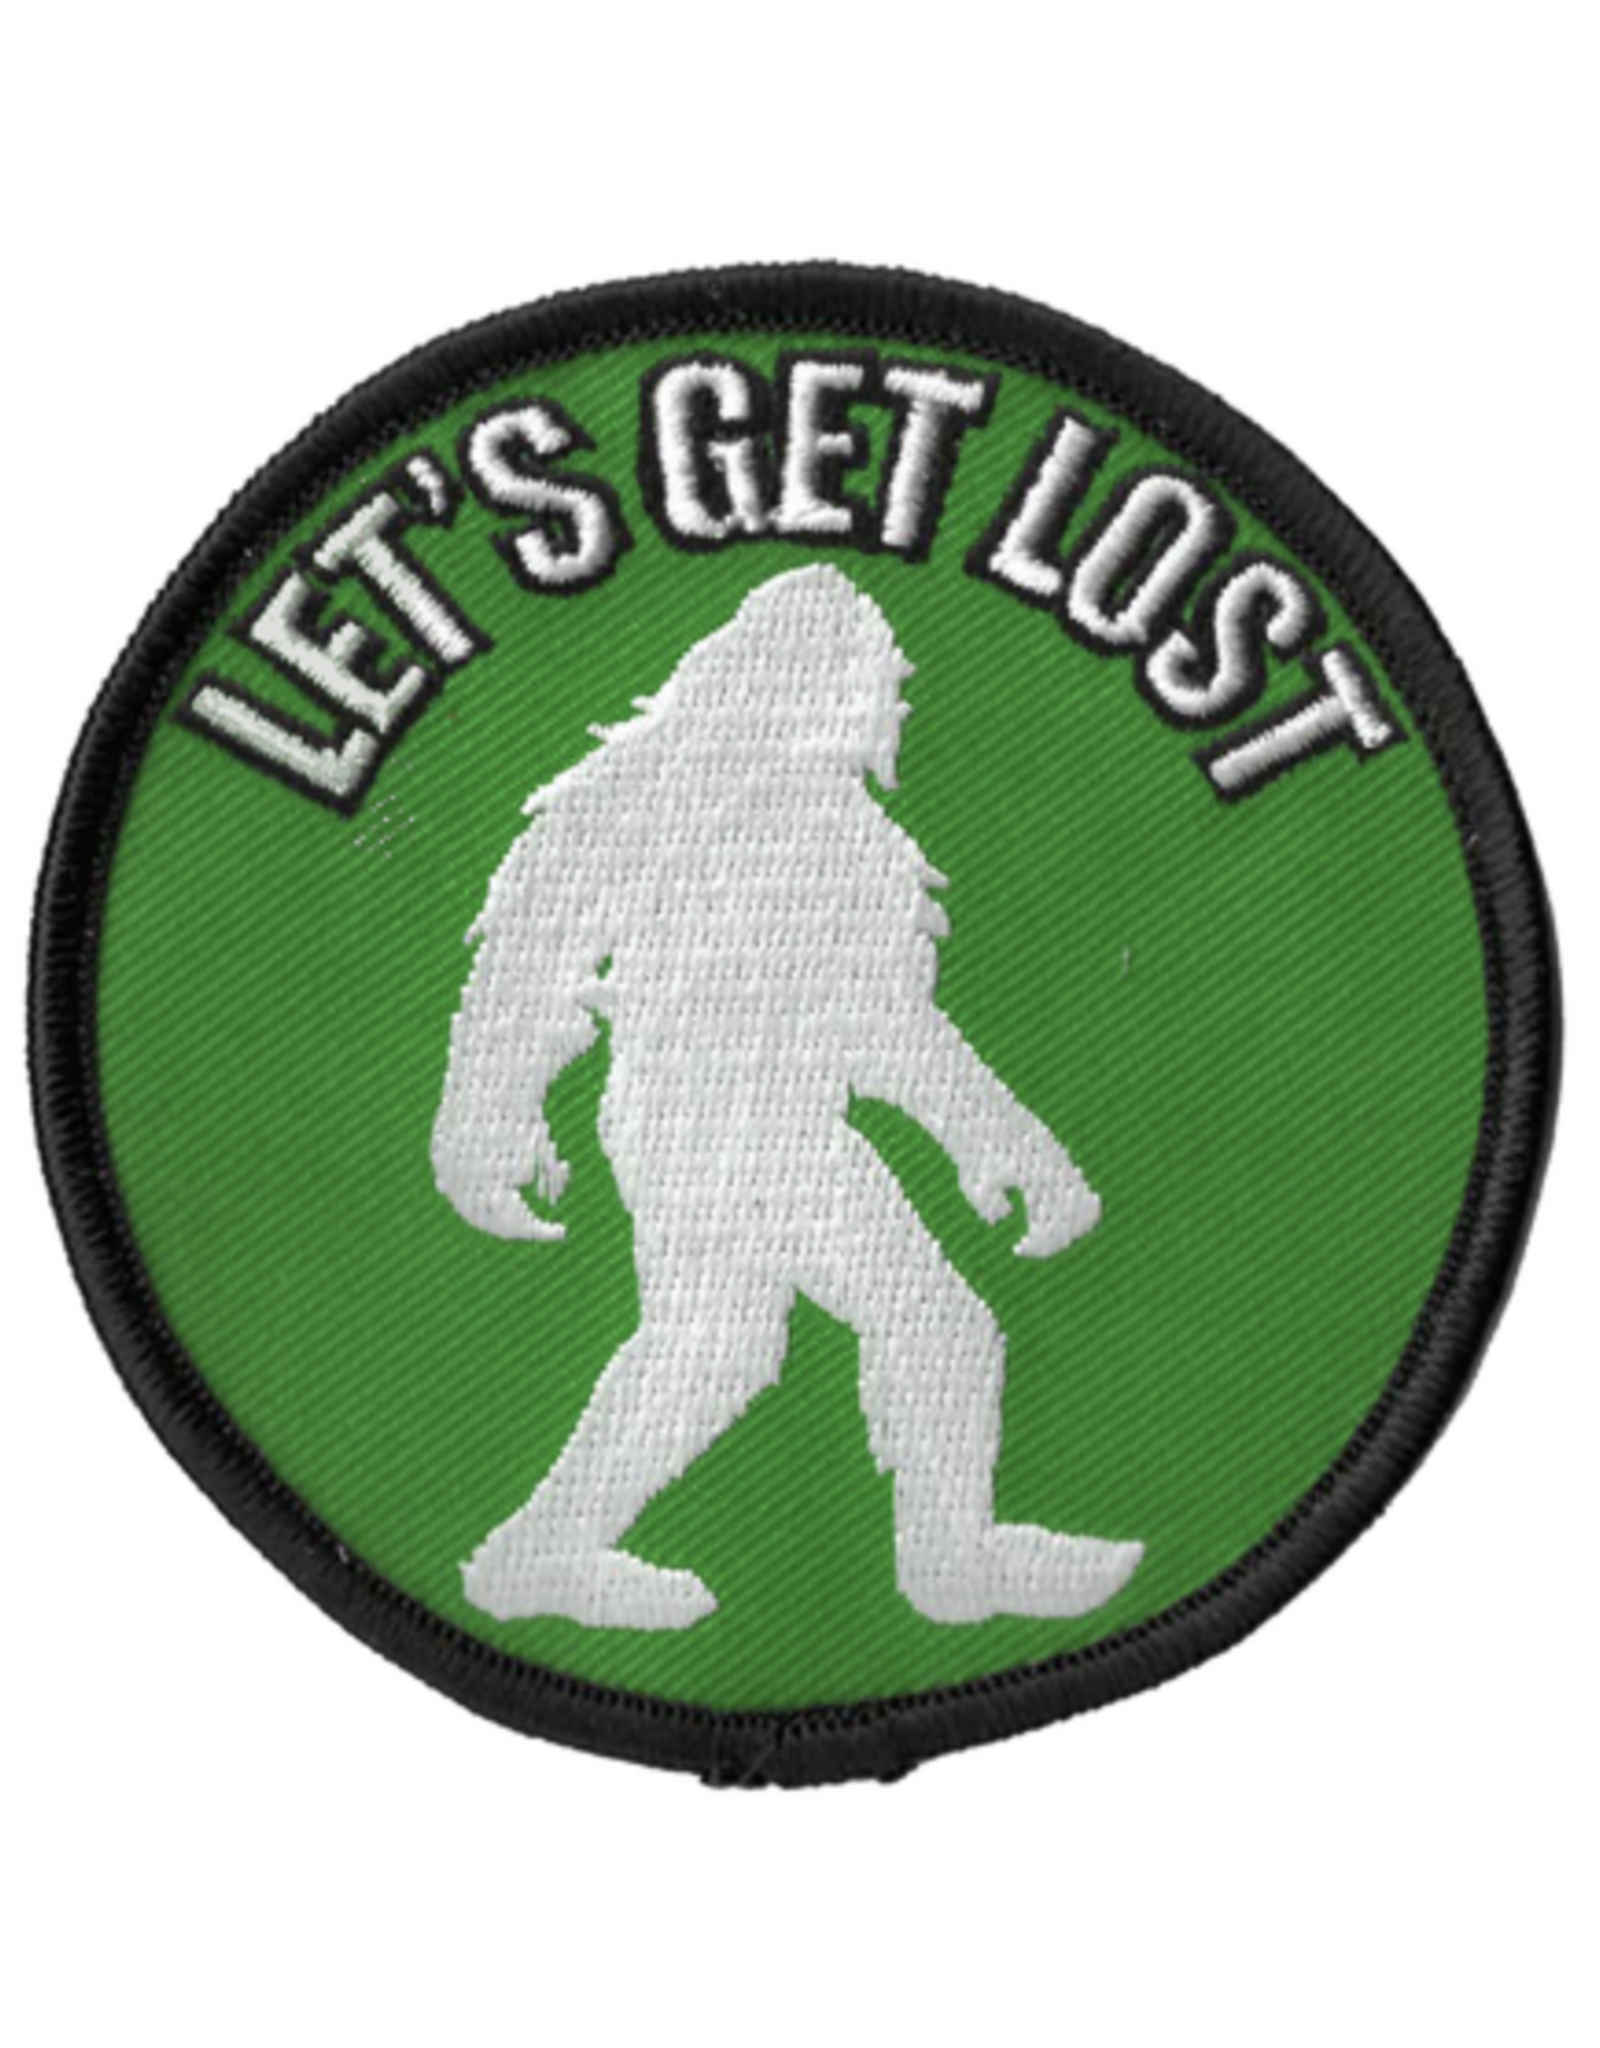 Let's Get Lost Bigfoot Sasquatch Patch